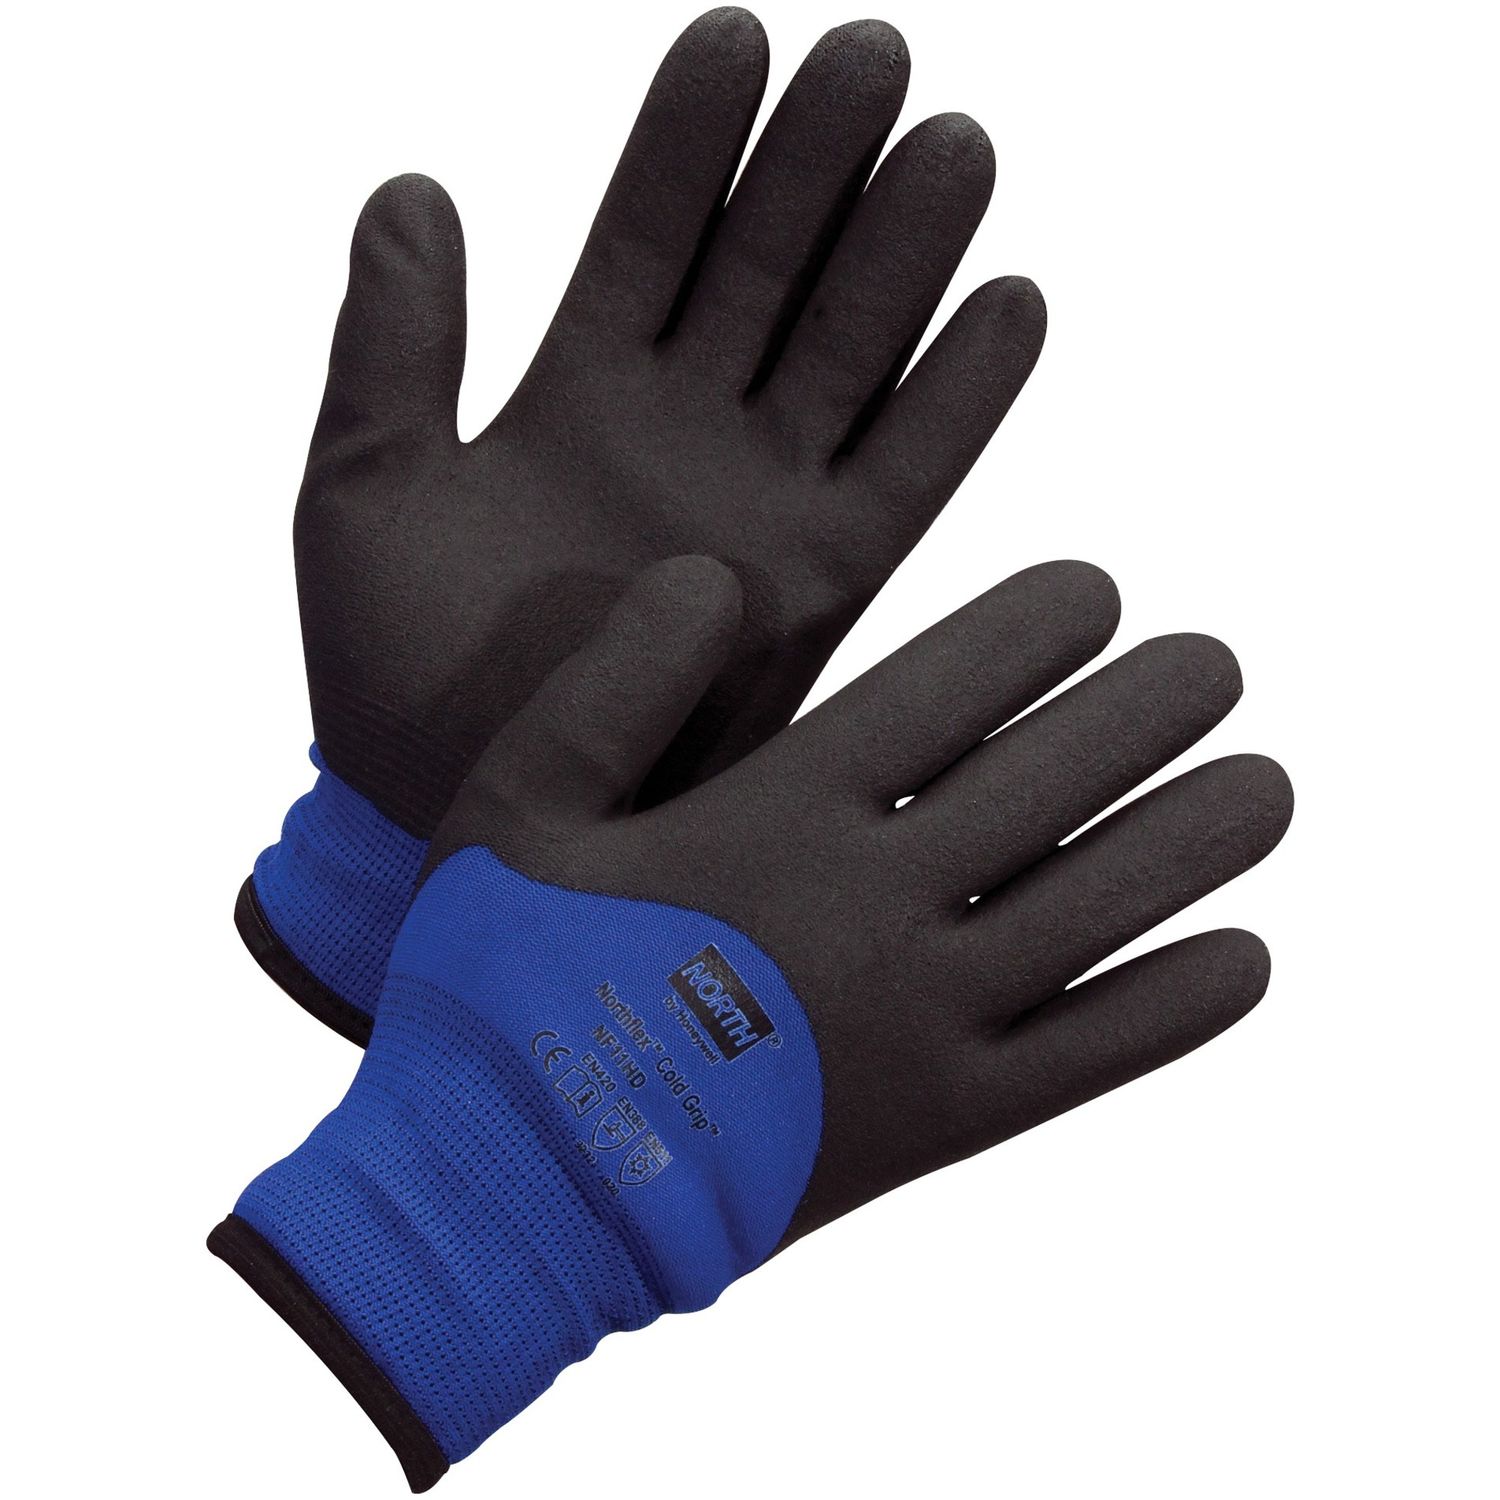 Northflex Coated Cold Grip Gloves Large Size, Nylon Shell, Polyvinyl Chloride (PVC) Palm, Polyamide, Synthetic Liner, Blue, Black